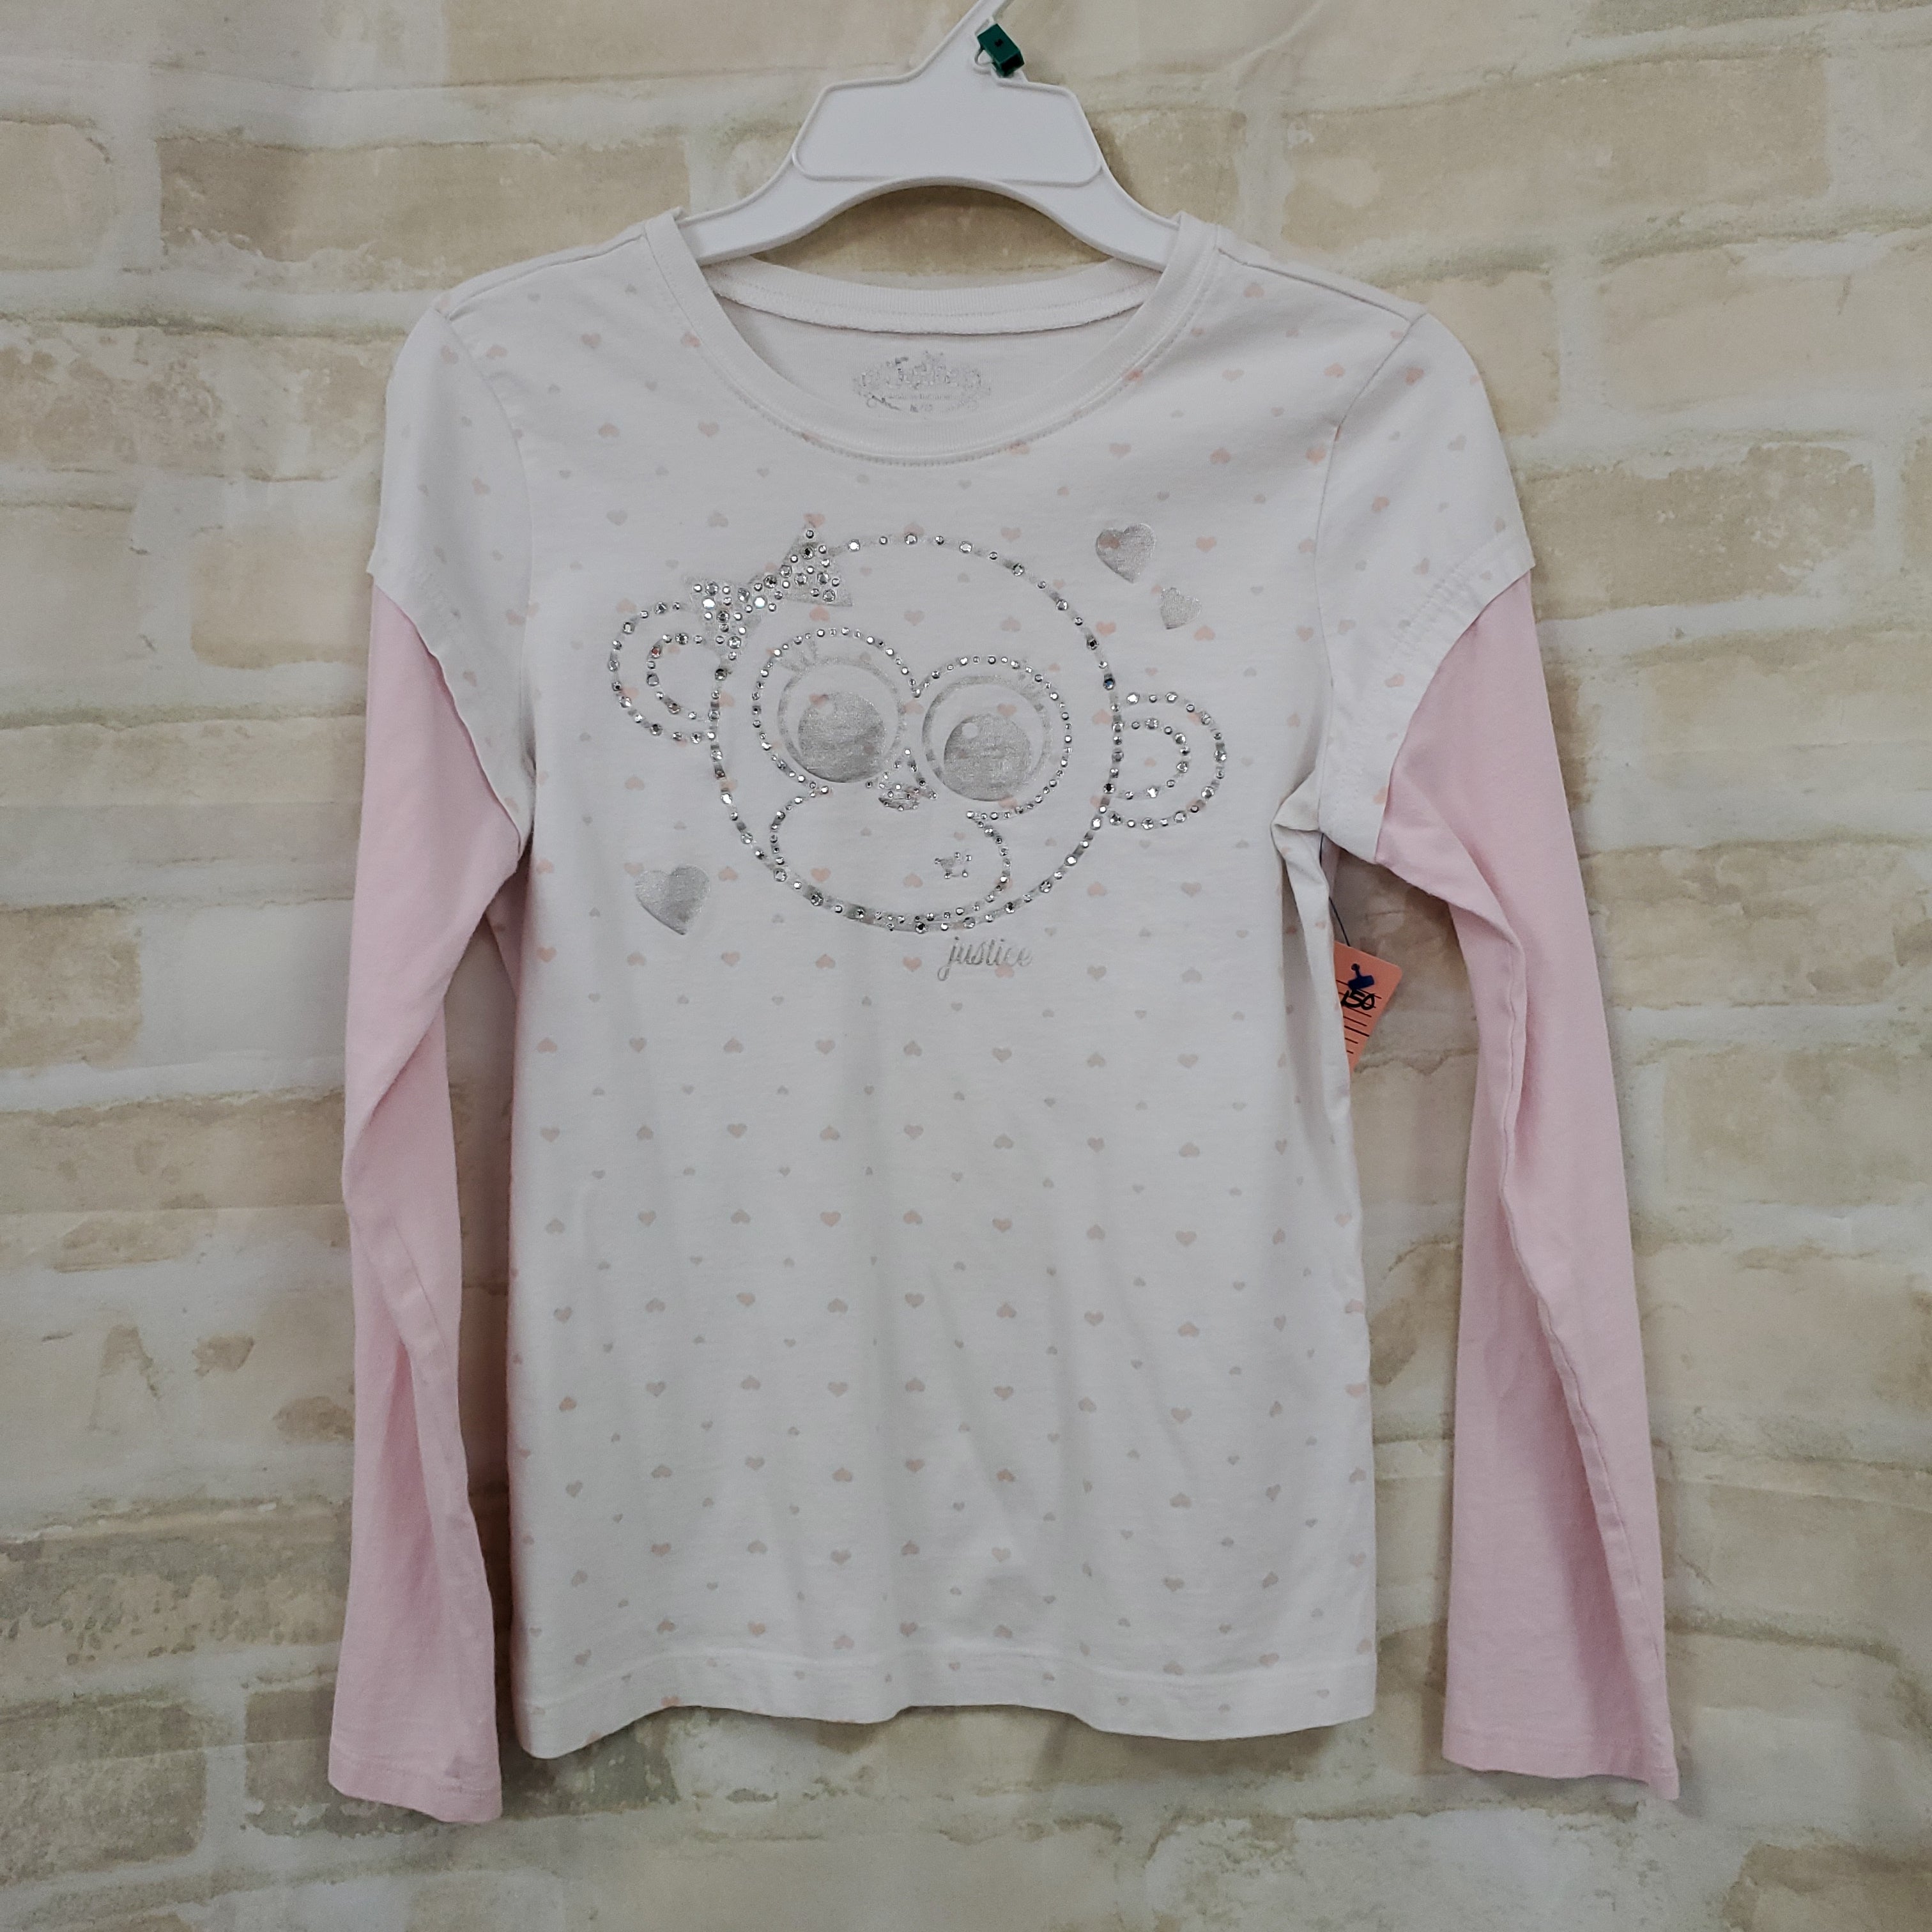 Justice girls shirt white/pink L/S tshirt 12